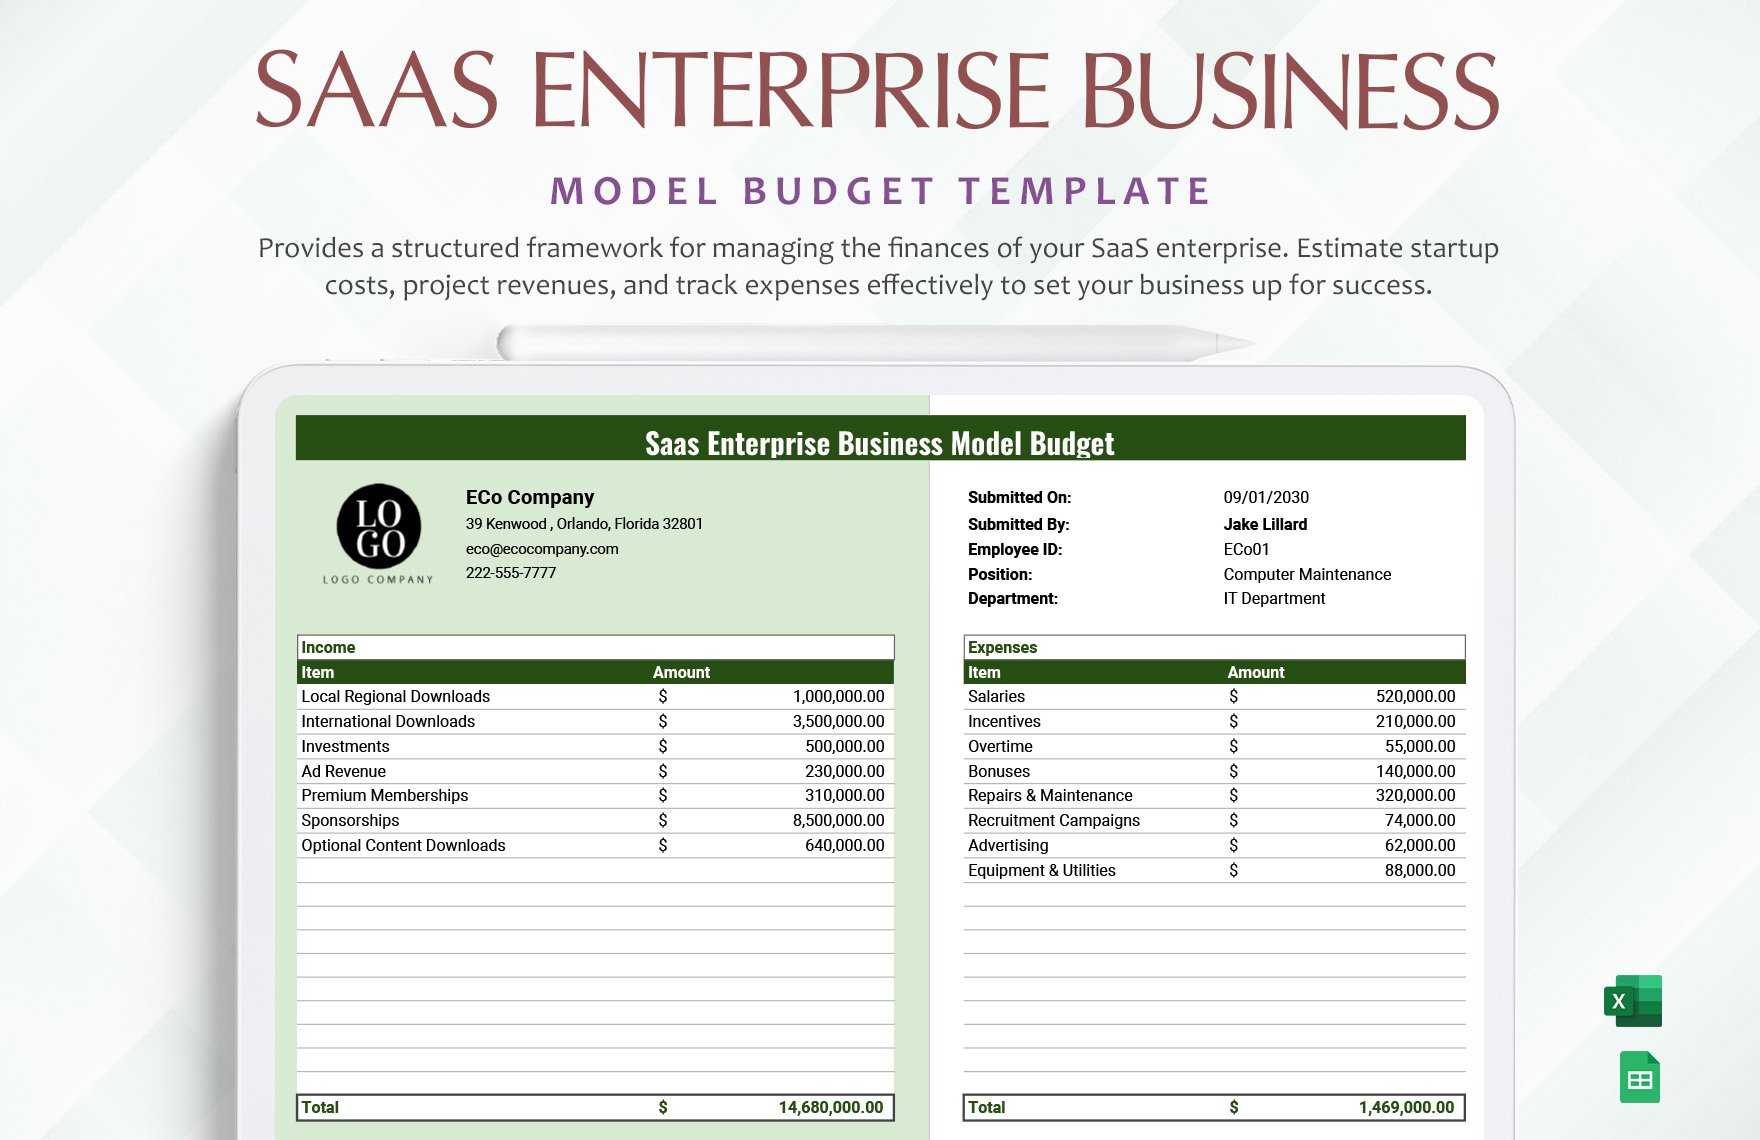 Free SaaS Enterprise Business Model Budget Template in Word, Google Docs, Excel, Google Sheets